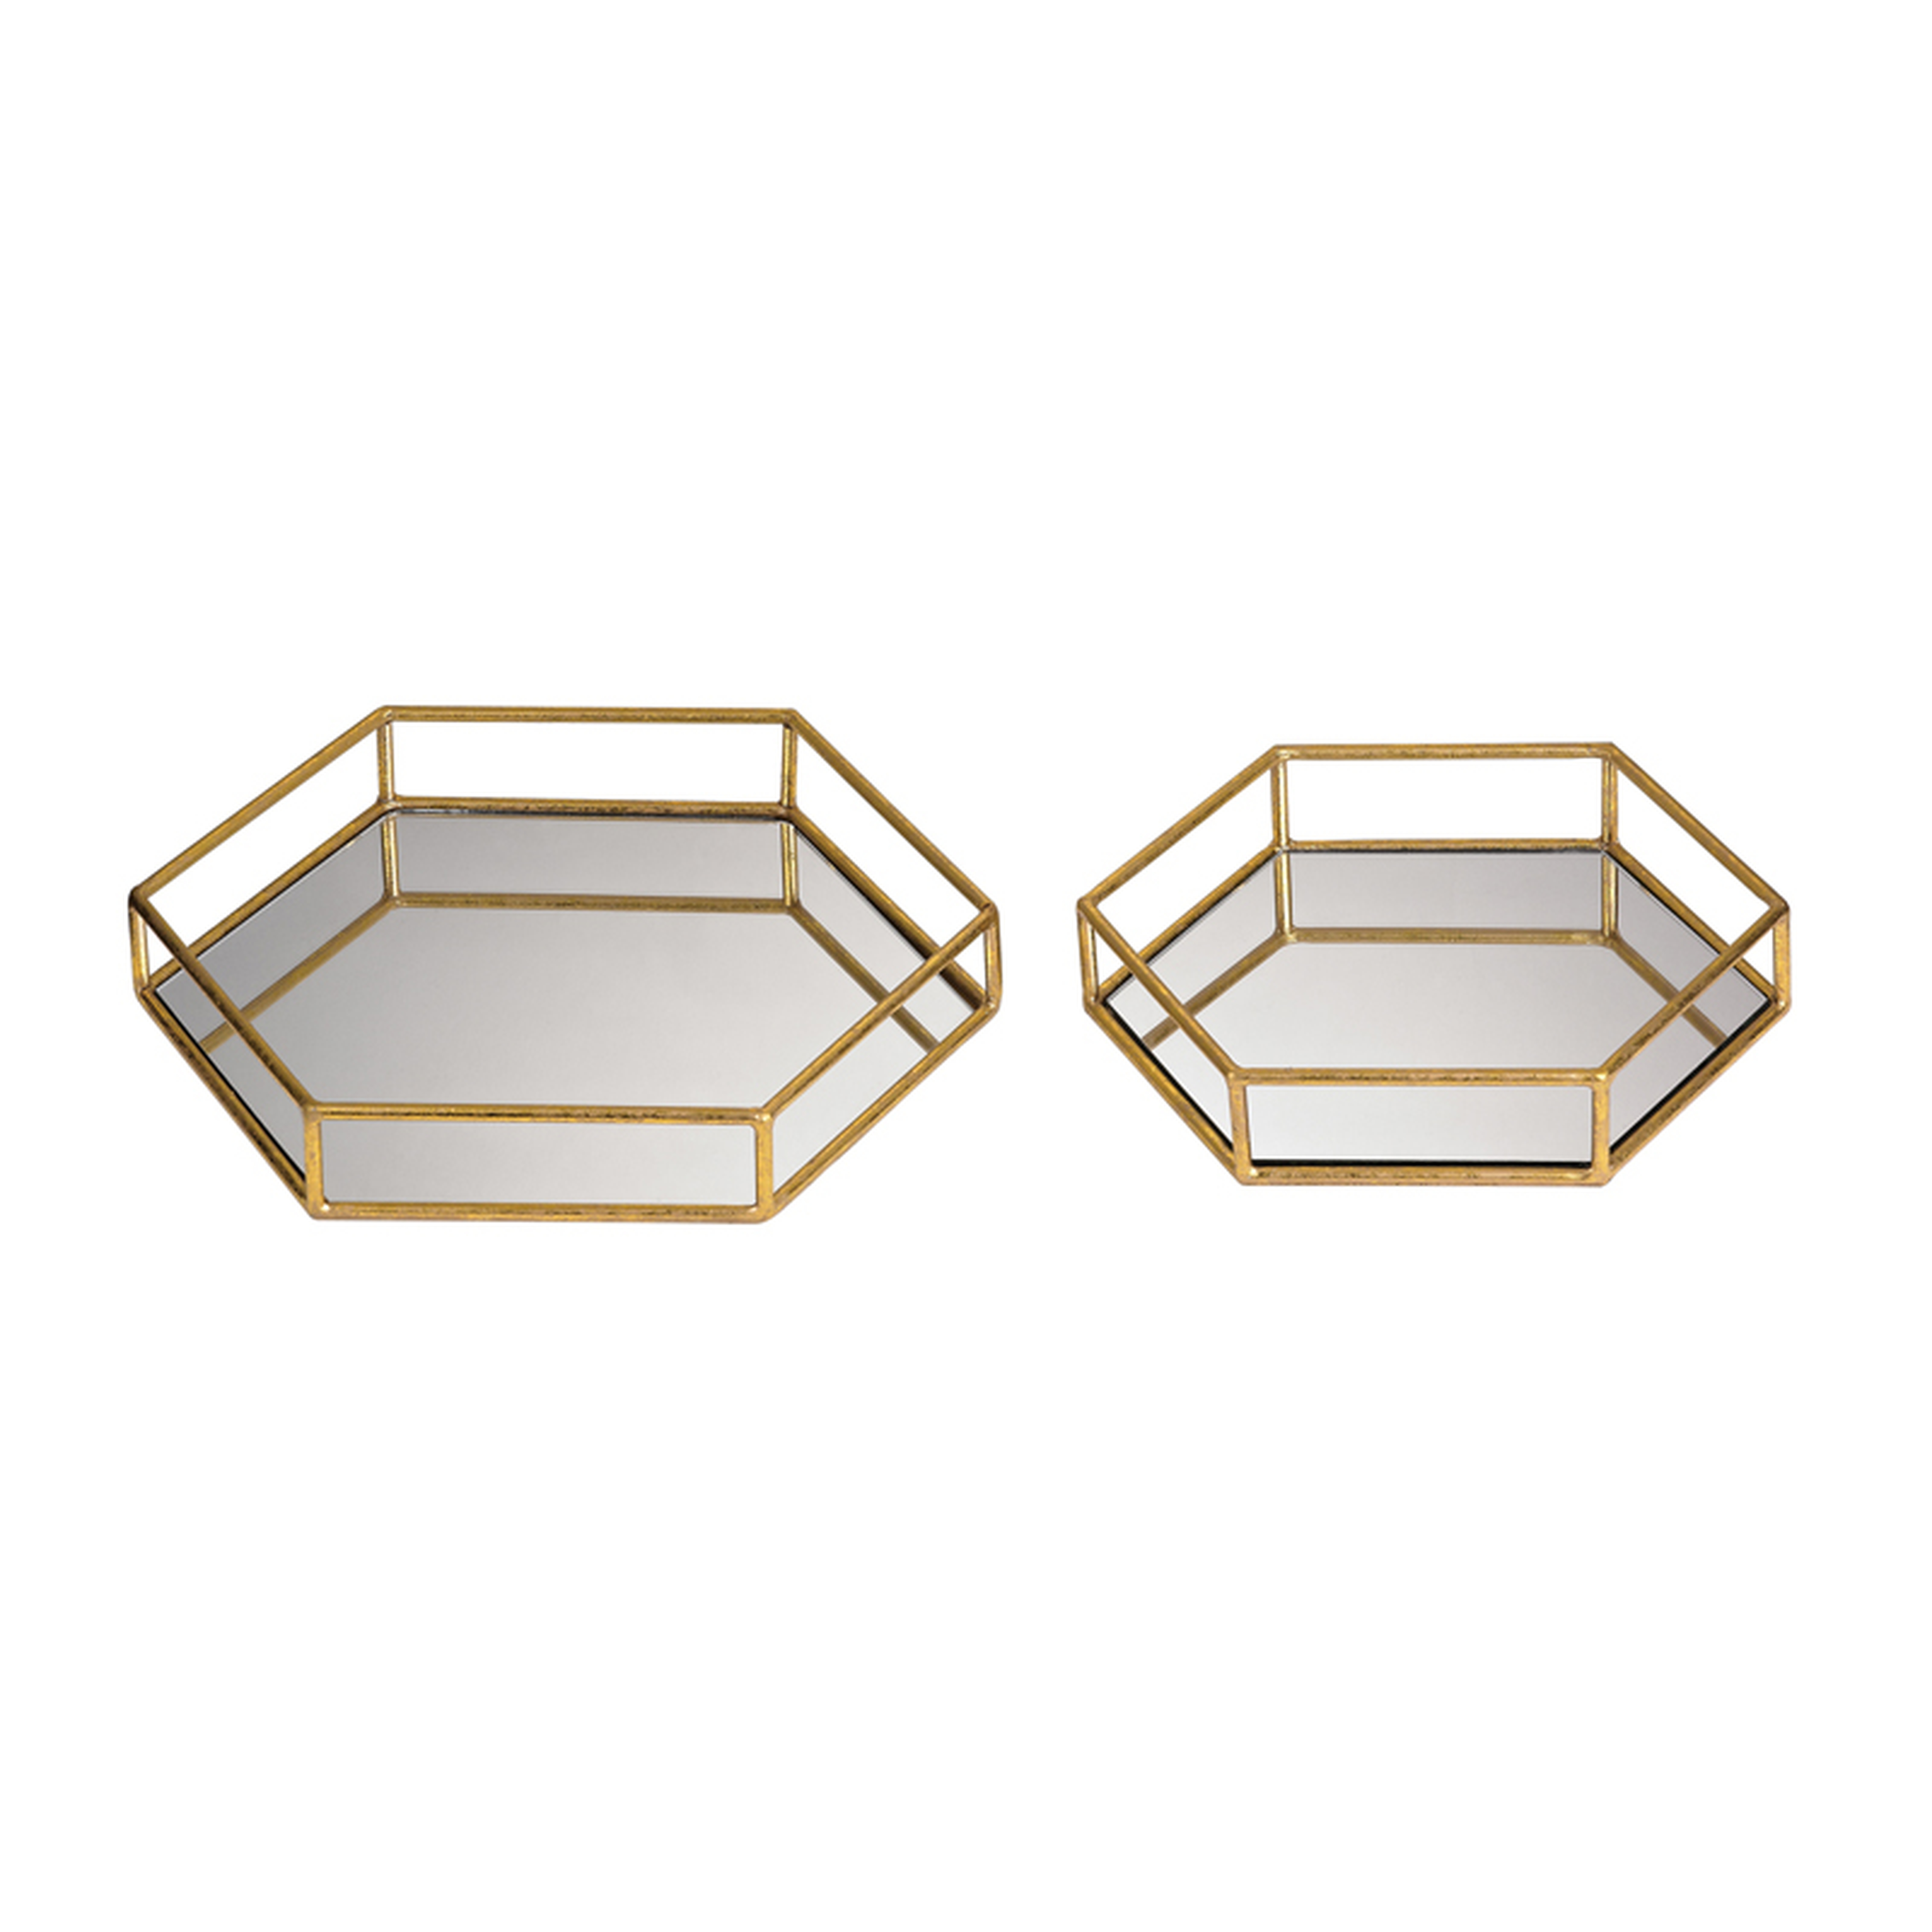 Mirrored hexagonal trays - Elk Home